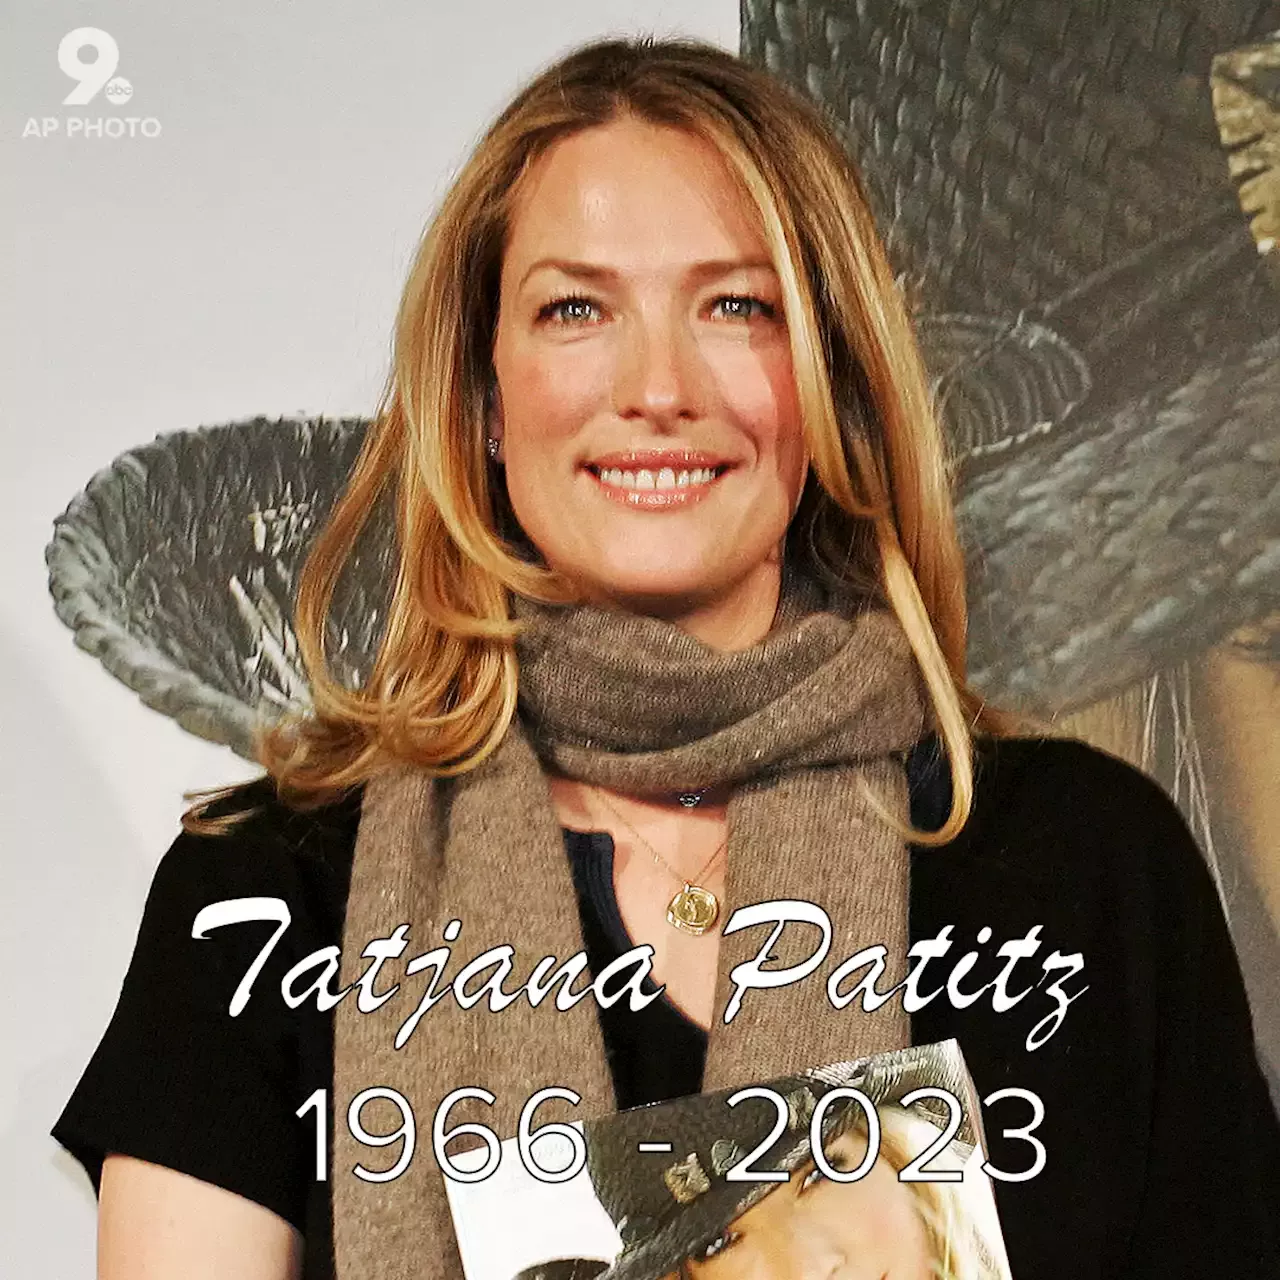 Tatjana Patitz, supermodel of 80s and 90s, dies at 56 in California